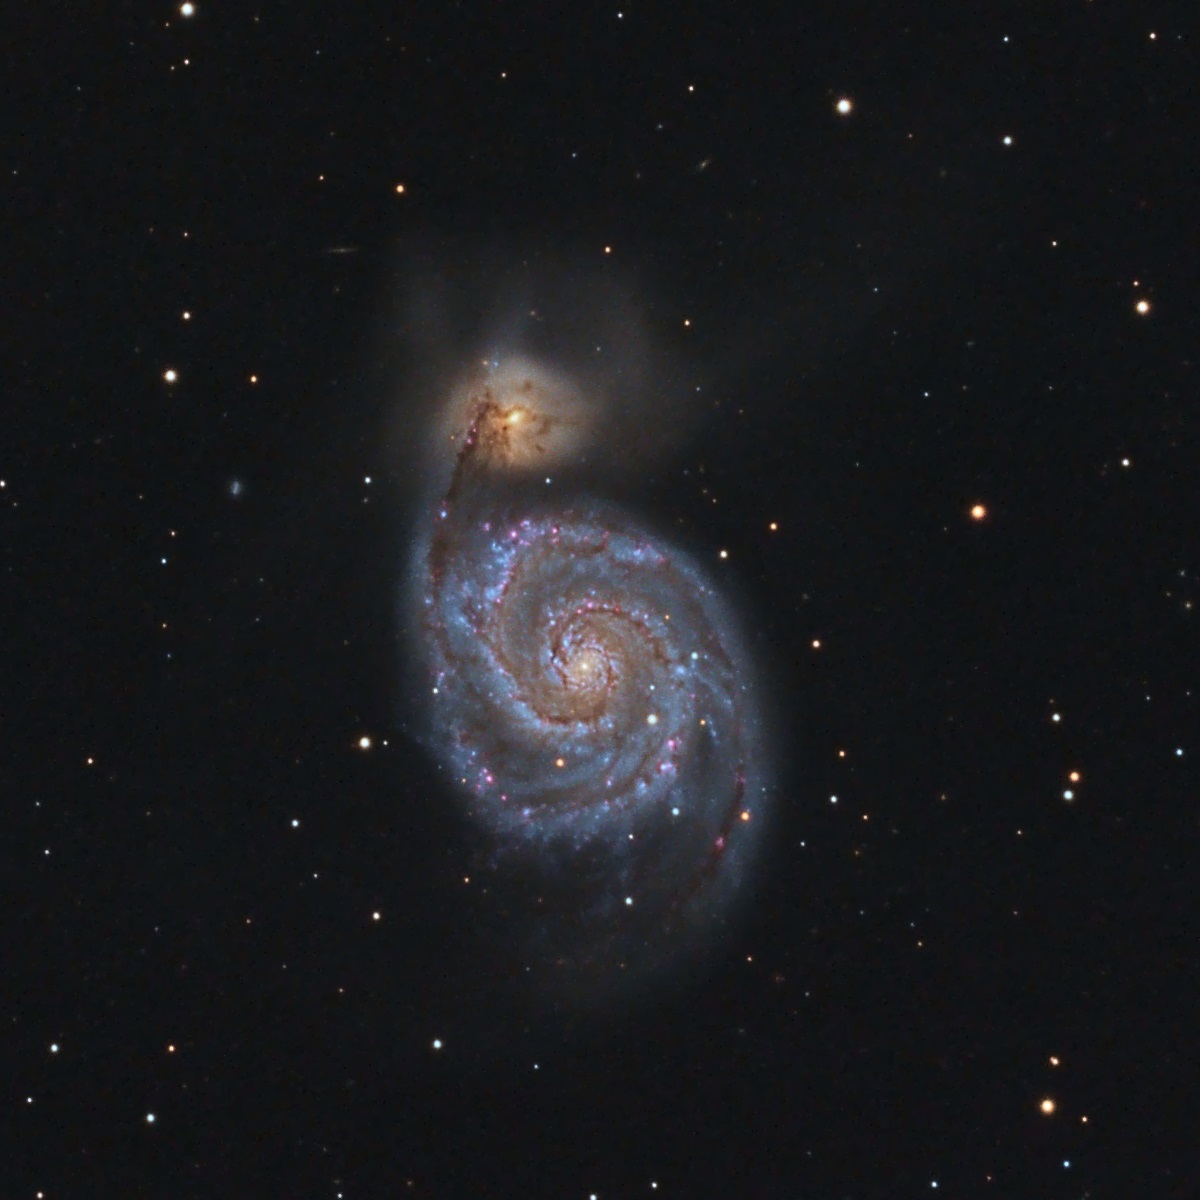 M51 
		- The Whirlpool Galaxy